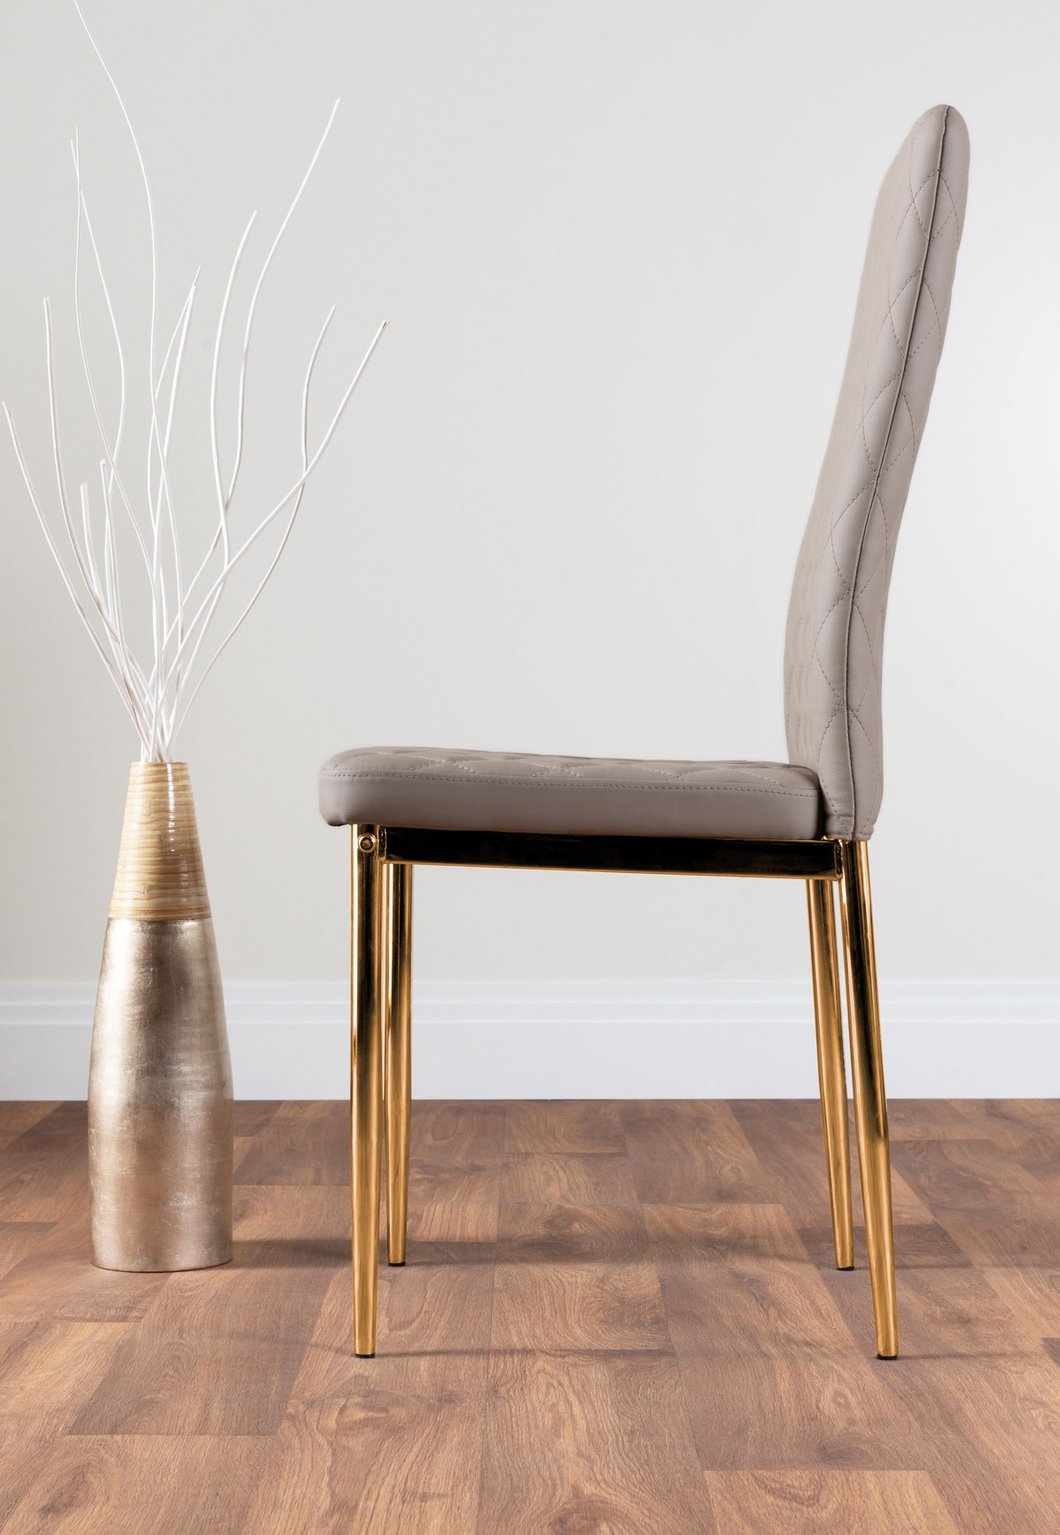 Novara White Gloss Gold Leg Round Dining Table 120cm and 4 Milan Chairs Set